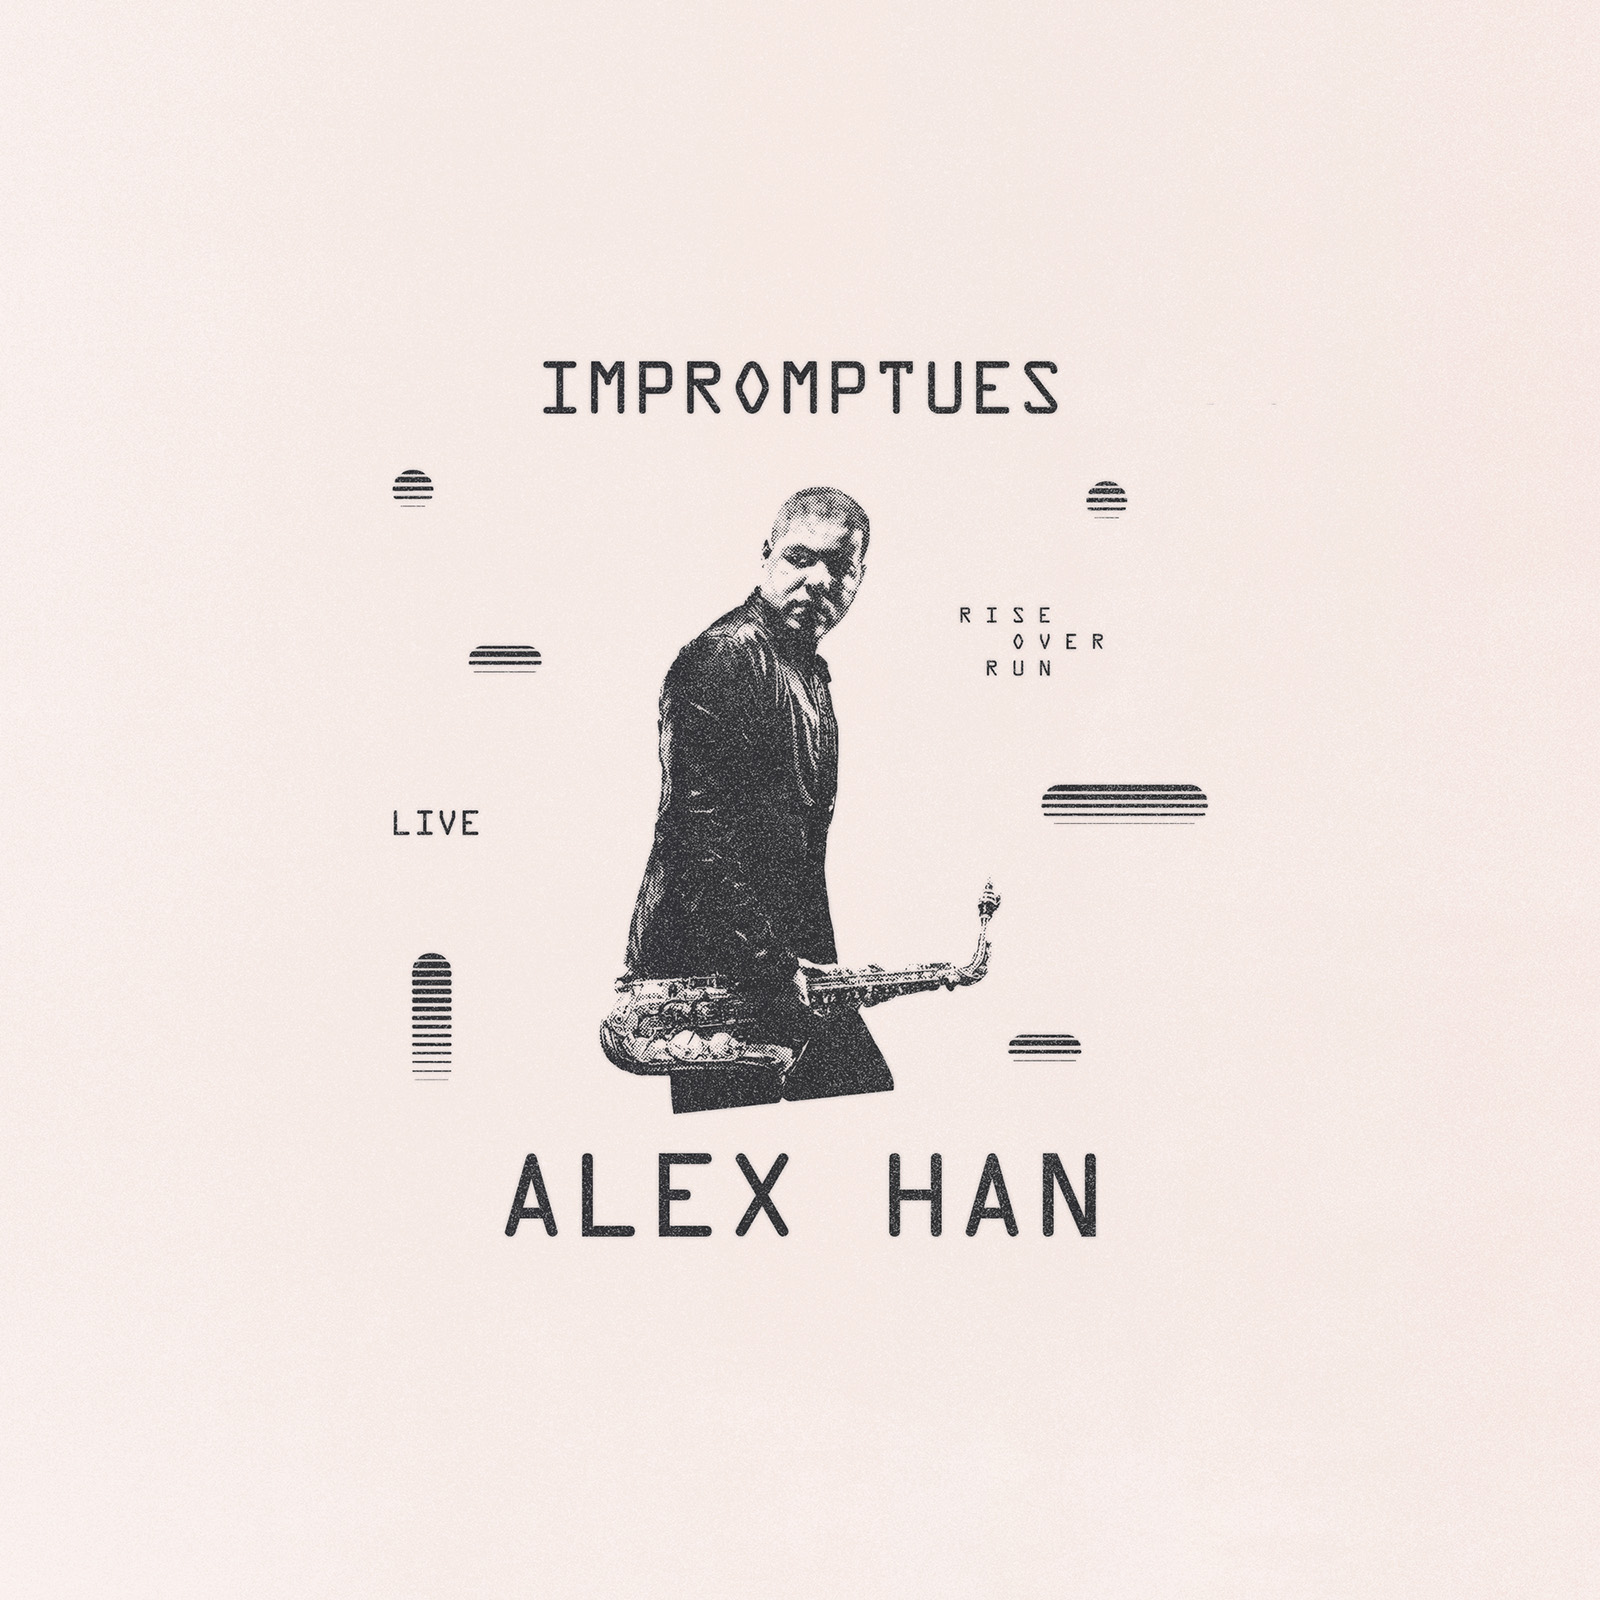 alex han at the line improptues